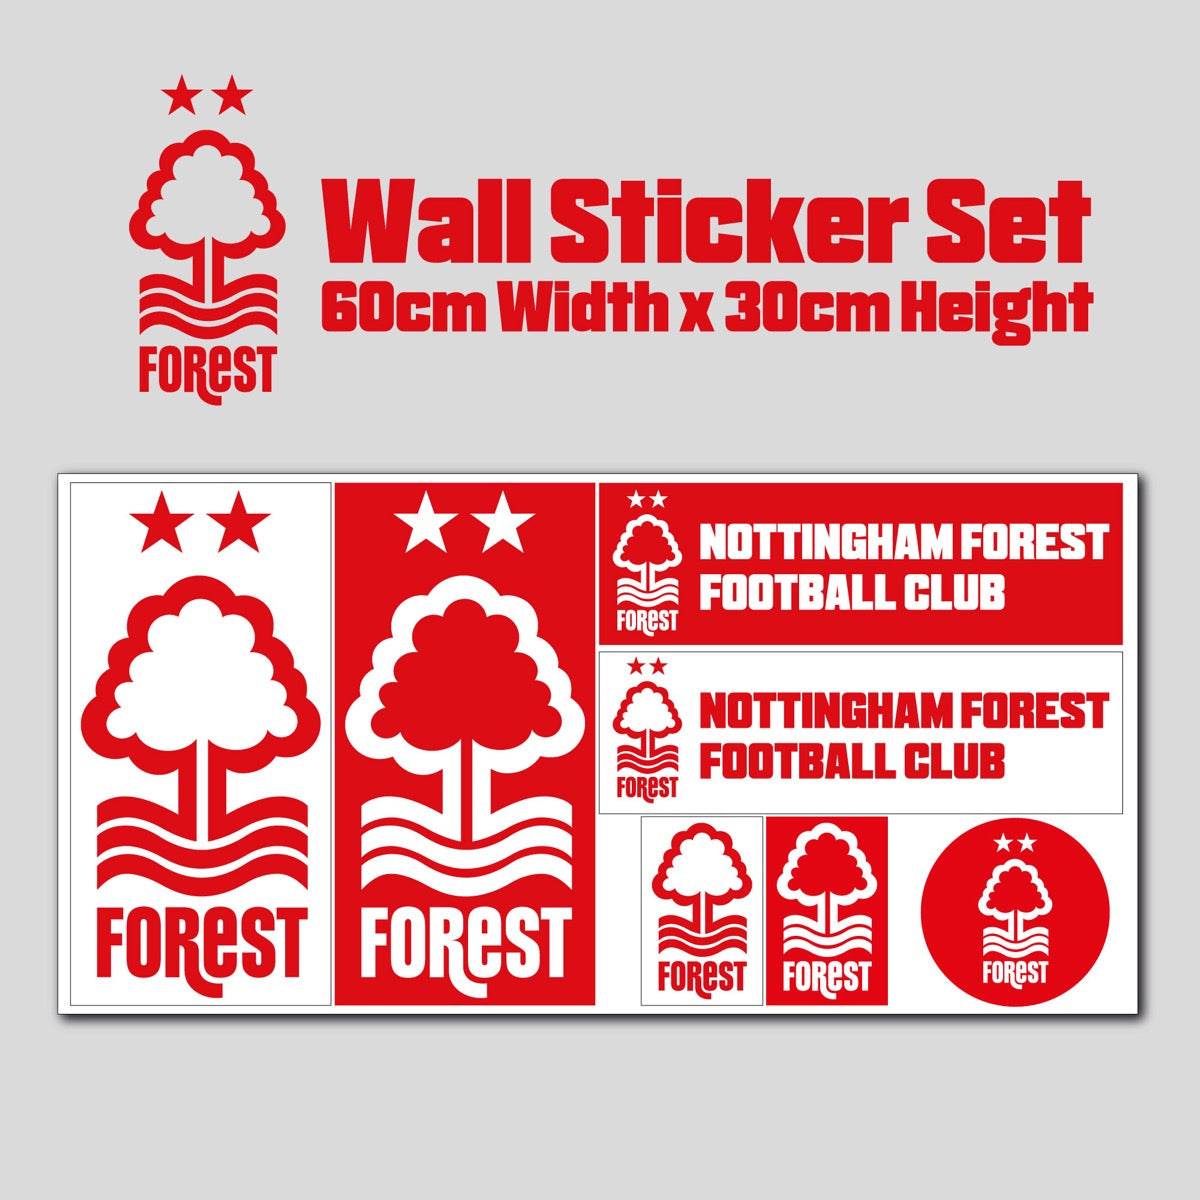 Nottingham Forest FC - Brice Samba Broken Wall Sticker + Decal Set